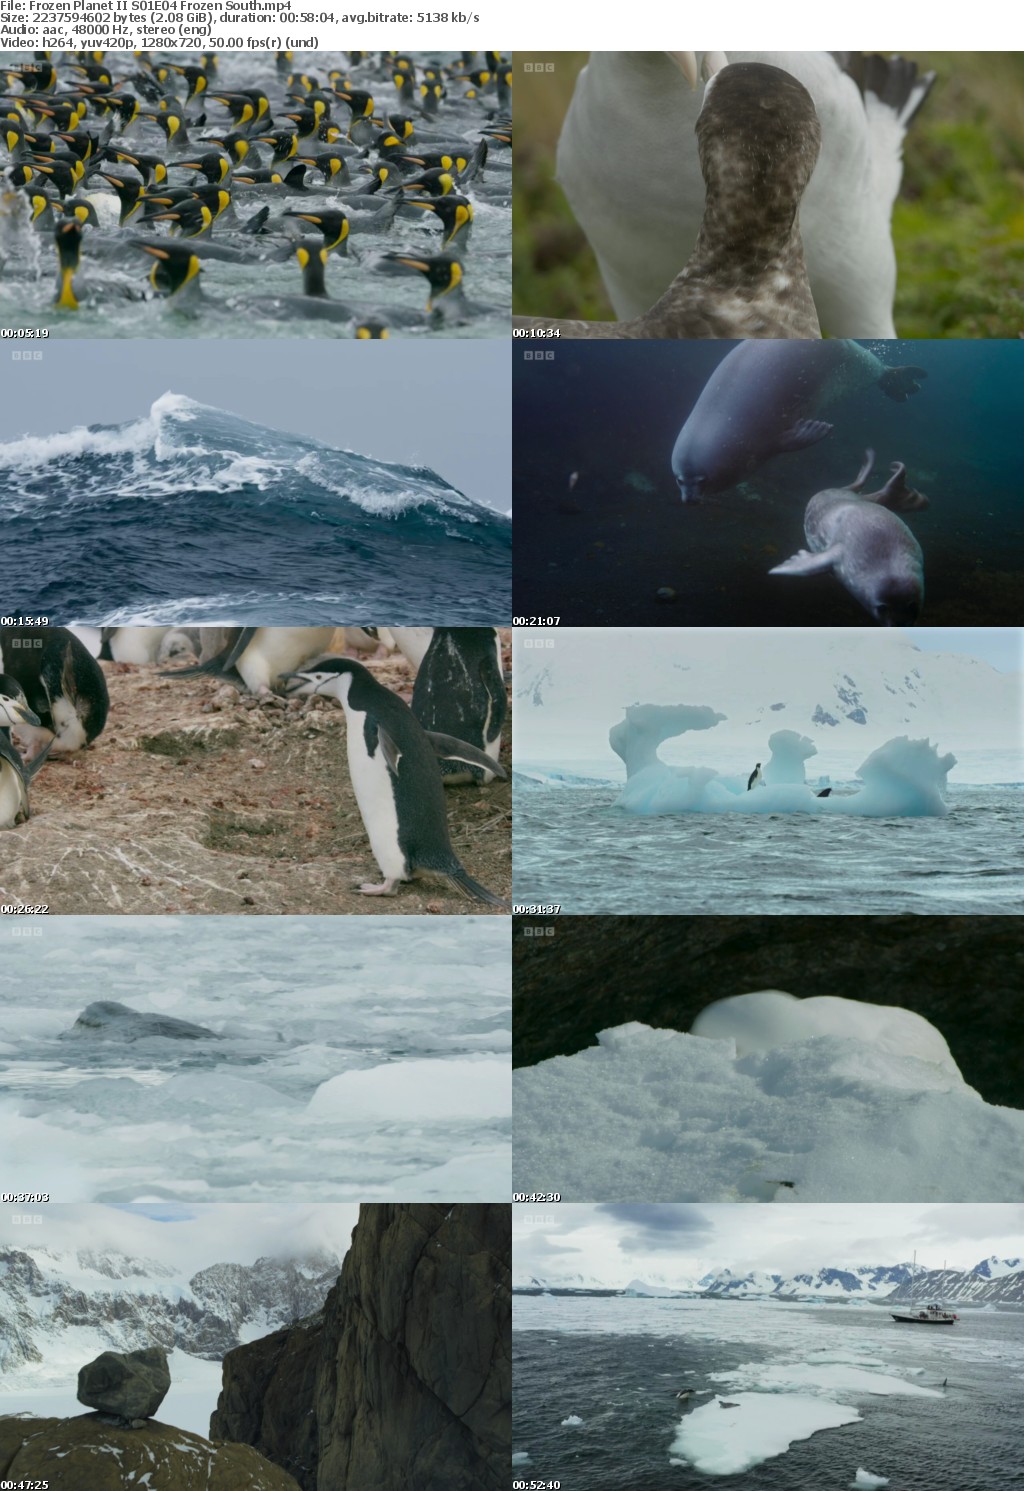 Frozen Planet II S01E04 Frozen South (1280x720p HD, 50fps, soft Eng subs)